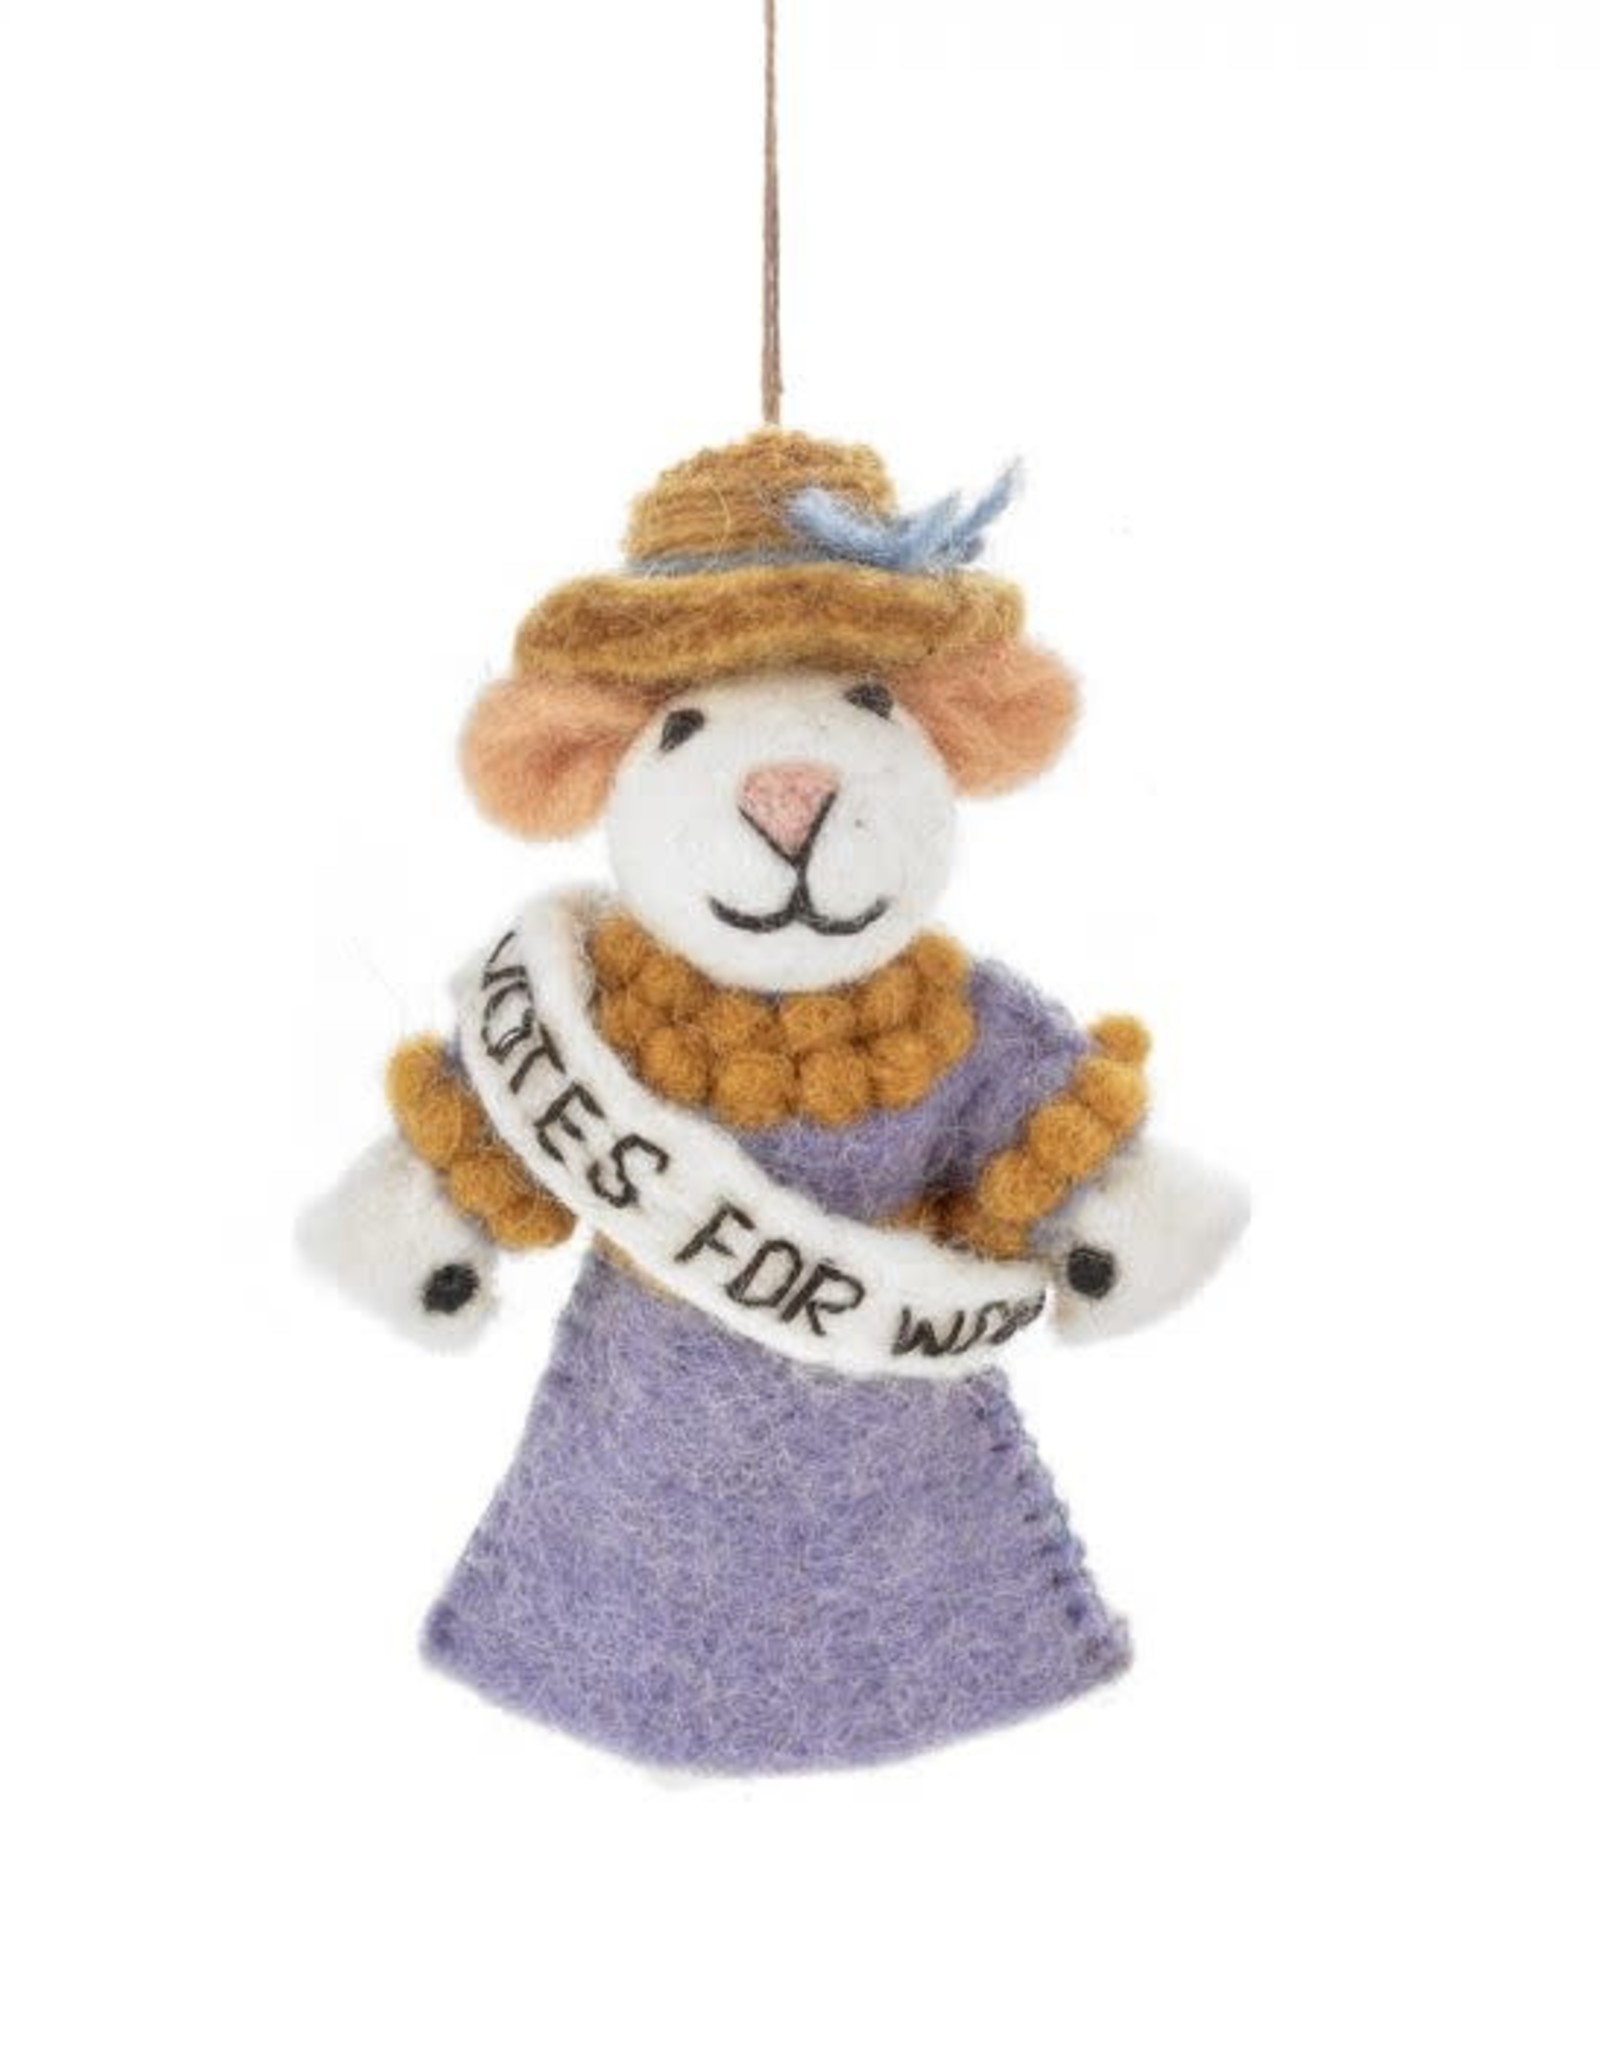 Felt So Good Emmeline The Felt Suffragette Mouse